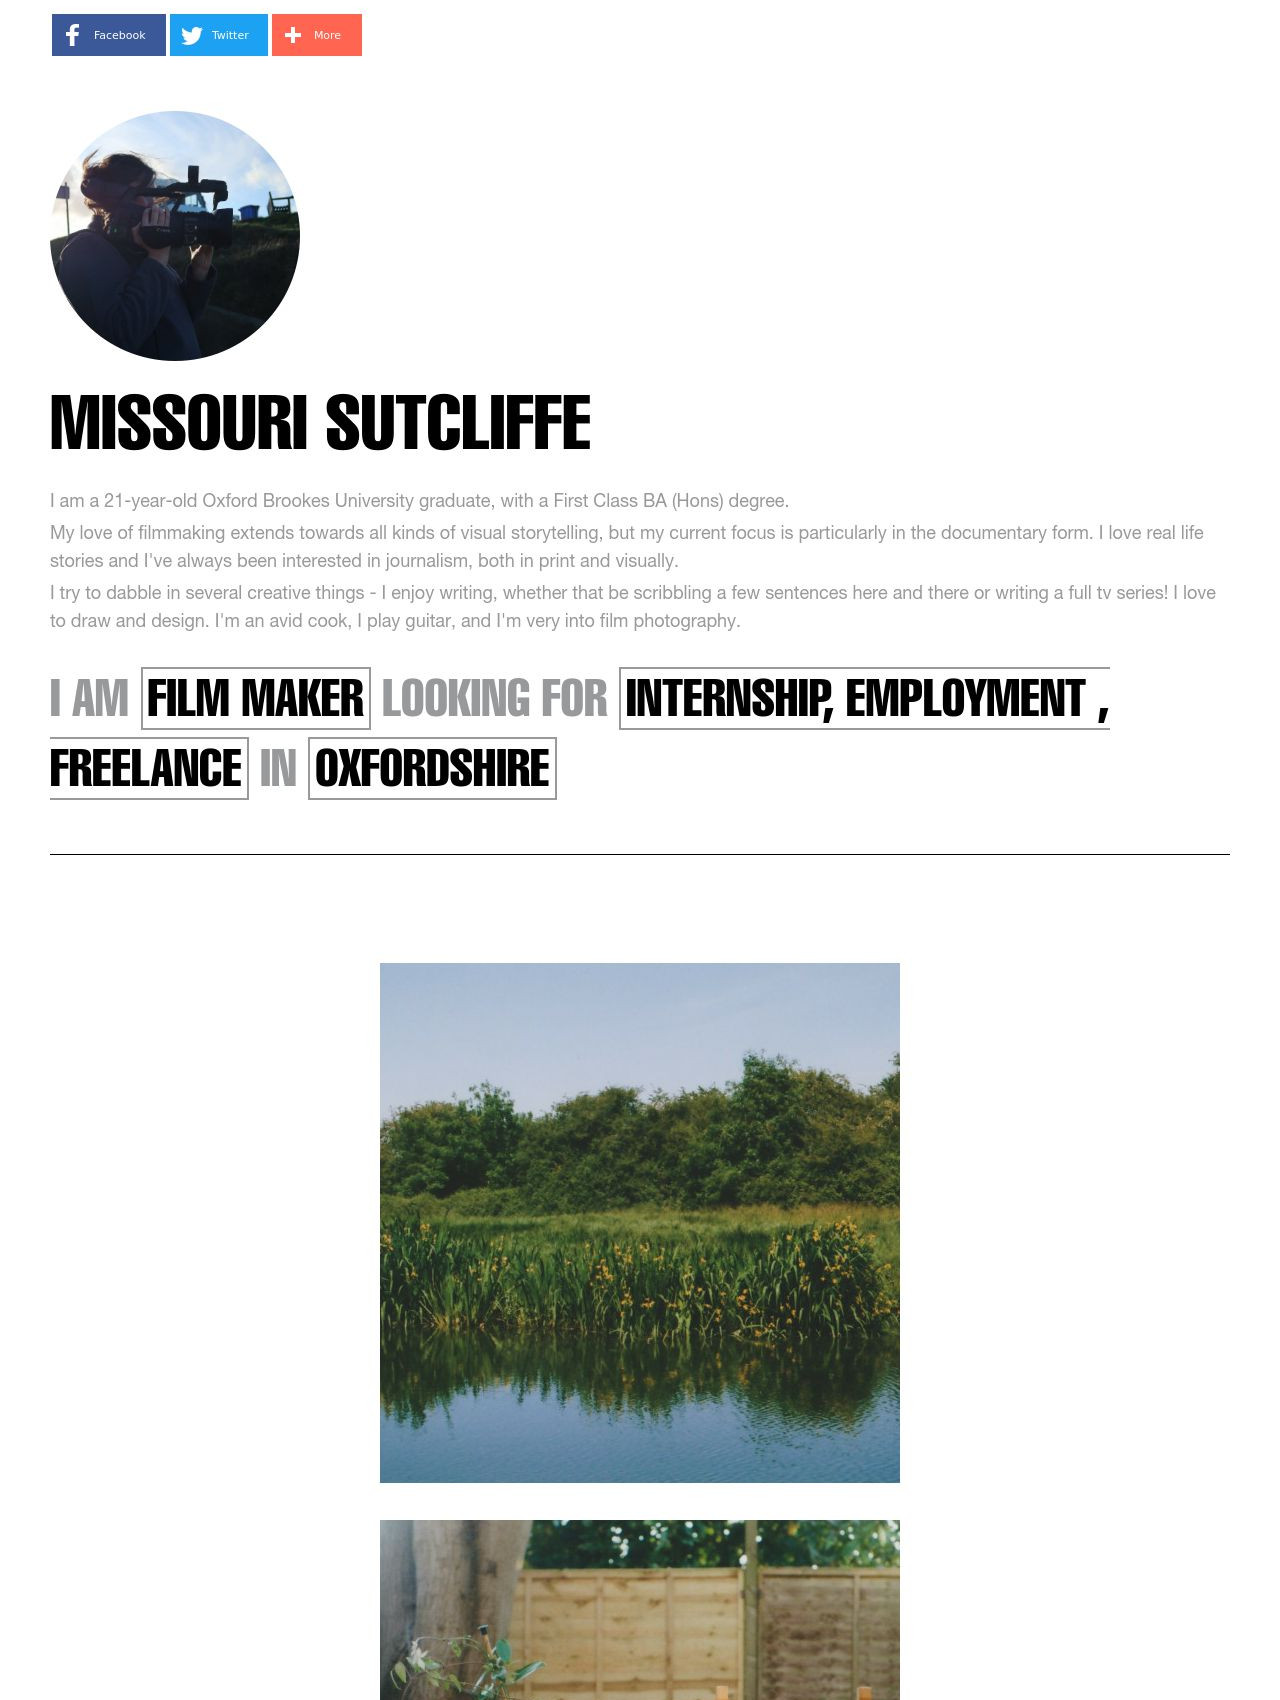 Missouri Sutcliffe